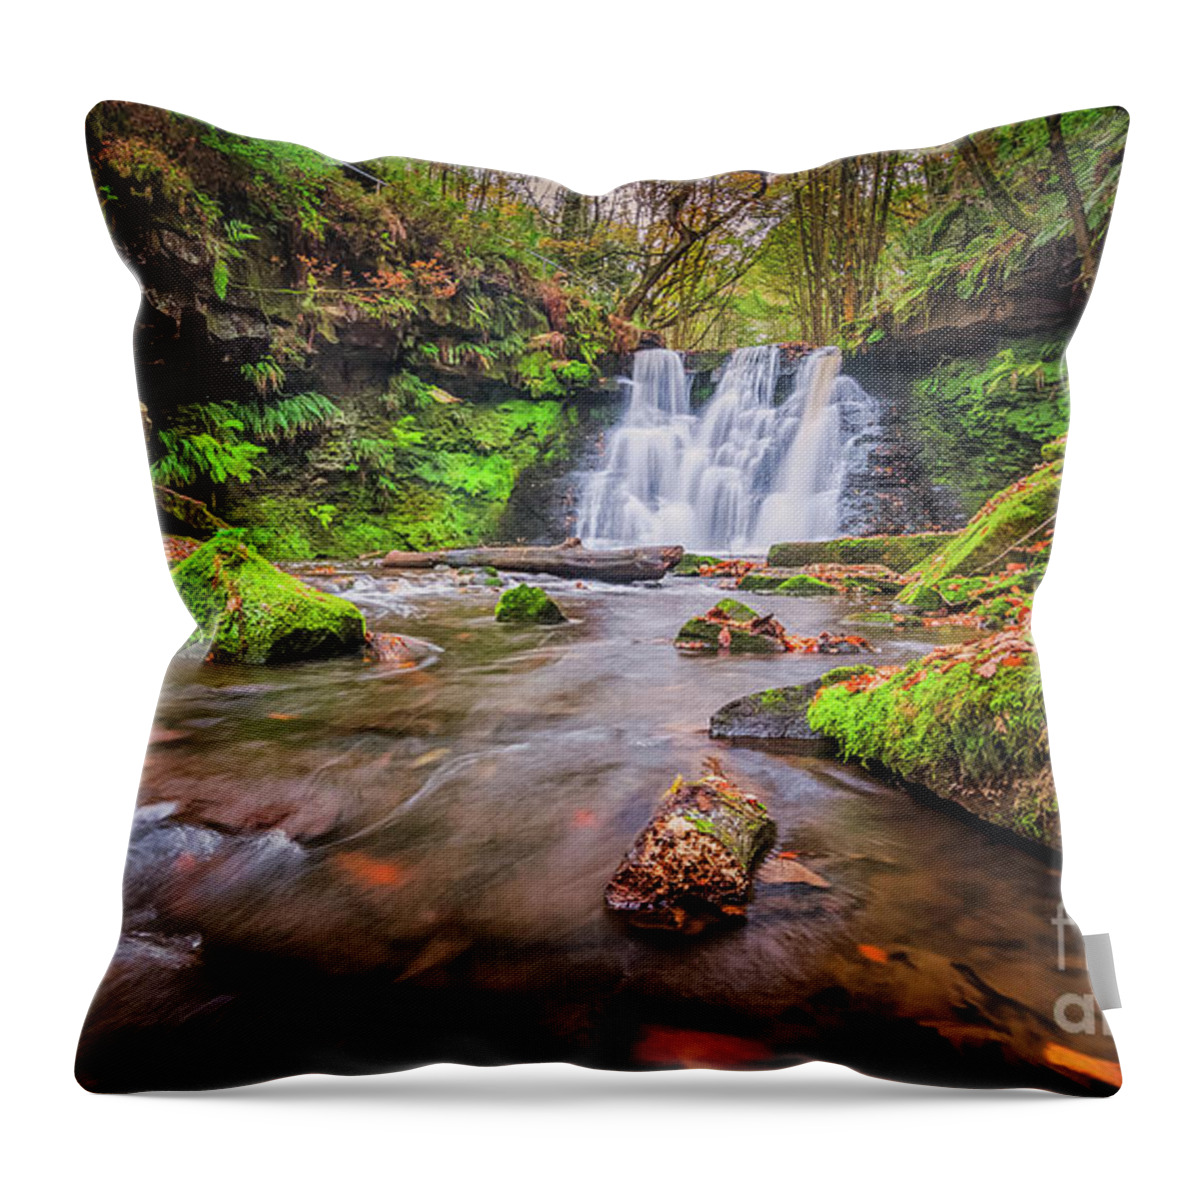 Waterfall Throw Pillow featuring the photograph Goit Stock Waterfall by Mariusz Talarek